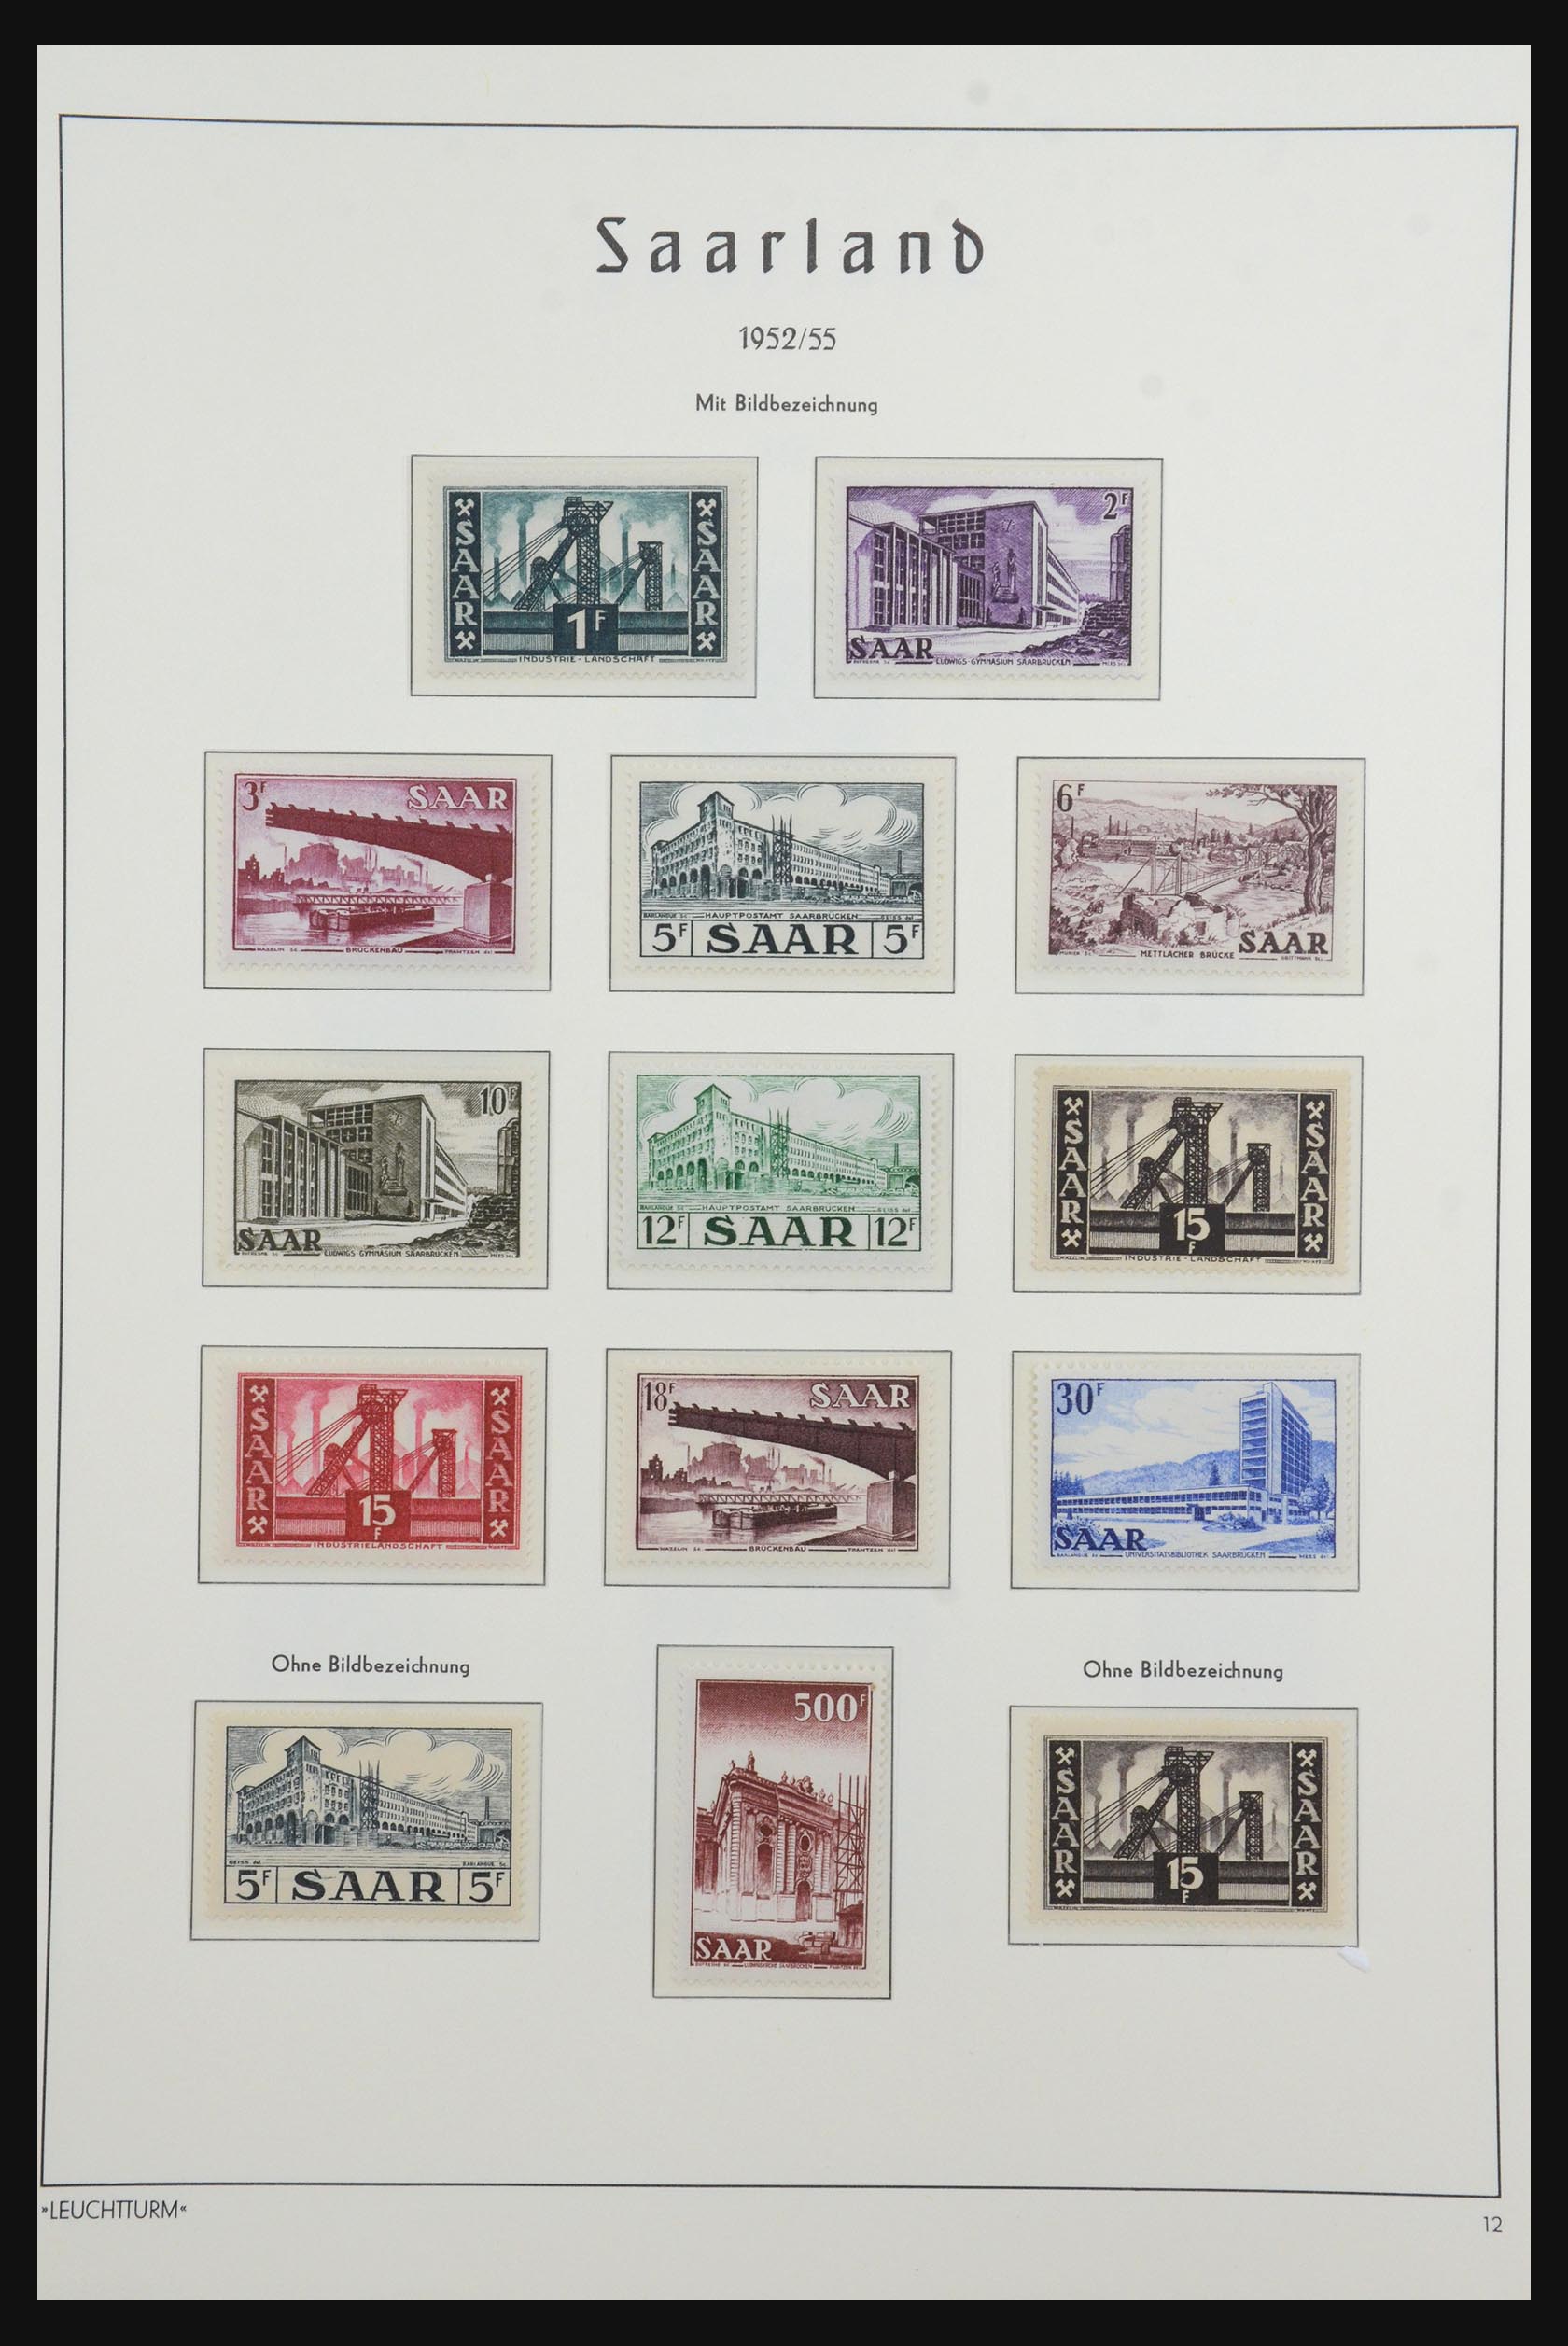 31601 098 - 31601 Bundespost, Berlin and Saar 1948-2008.